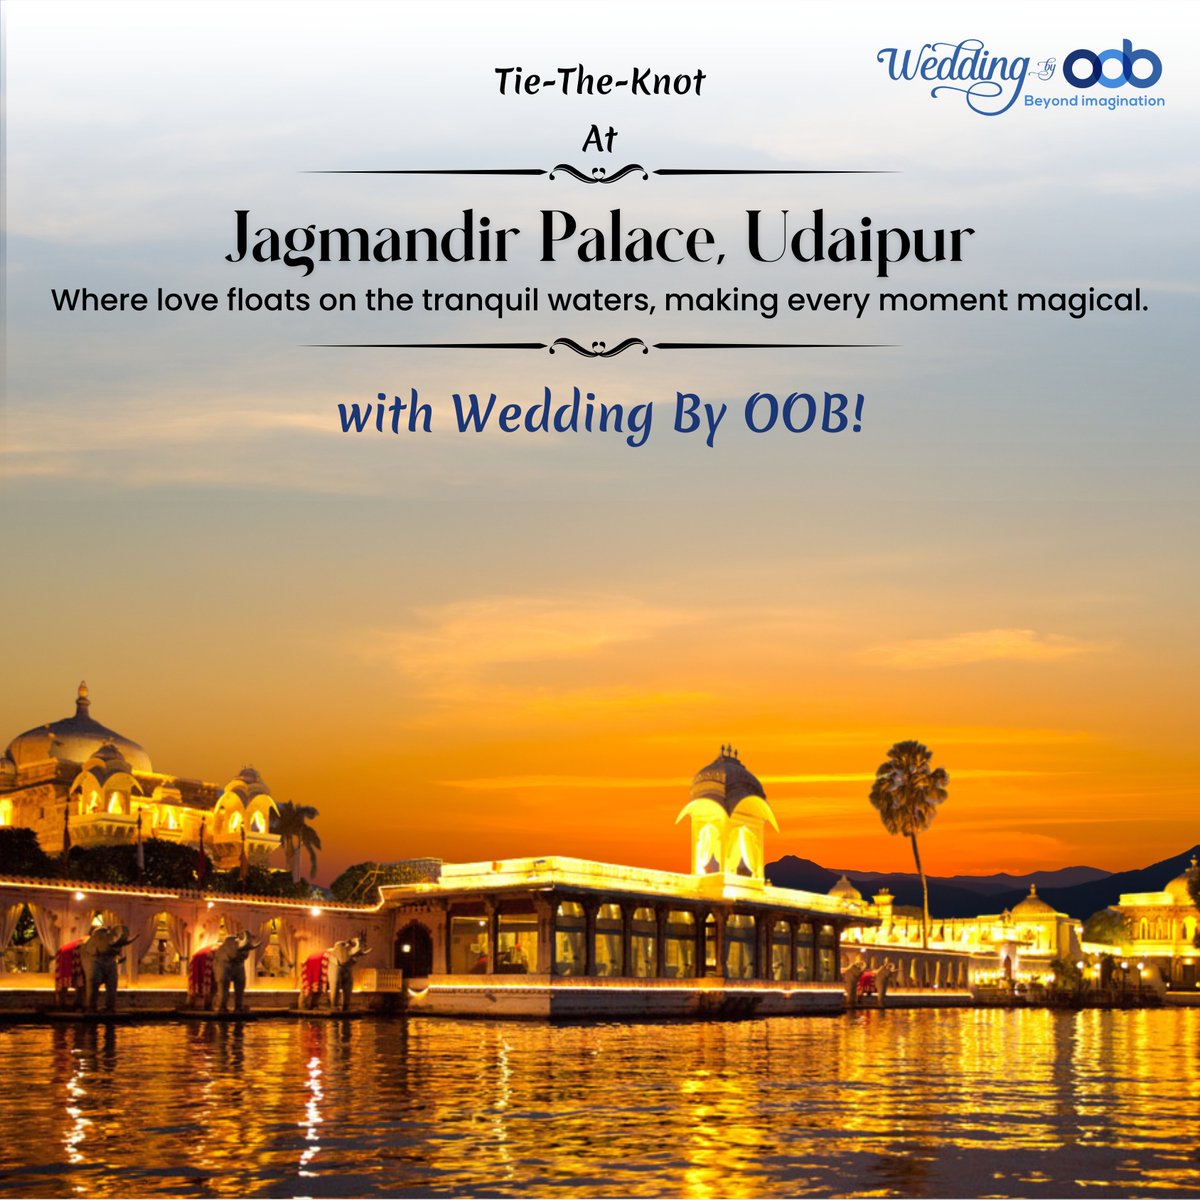 𝐄𝐱𝐩𝐞𝐫𝐢𝐞𝐧𝐜𝐞 𝐭𝐡𝐞 𝐦𝐚𝐠𝐢𝐜 𝐨𝐟 𝐉𝐚𝐠𝐦𝐚𝐧𝐝𝐢𝐫 𝐏𝐚𝐥𝐚𝐜𝐞 𝐰𝐢𝐭𝐡 𝐖𝐞𝐝𝐝𝐢𝐧𝐠 𝐁𝐲 𝐎𝐎𝐁!

#weddinginspiration #weddingplanner  #jagmandirpalace #weddingplanning   #weddingplannersindia